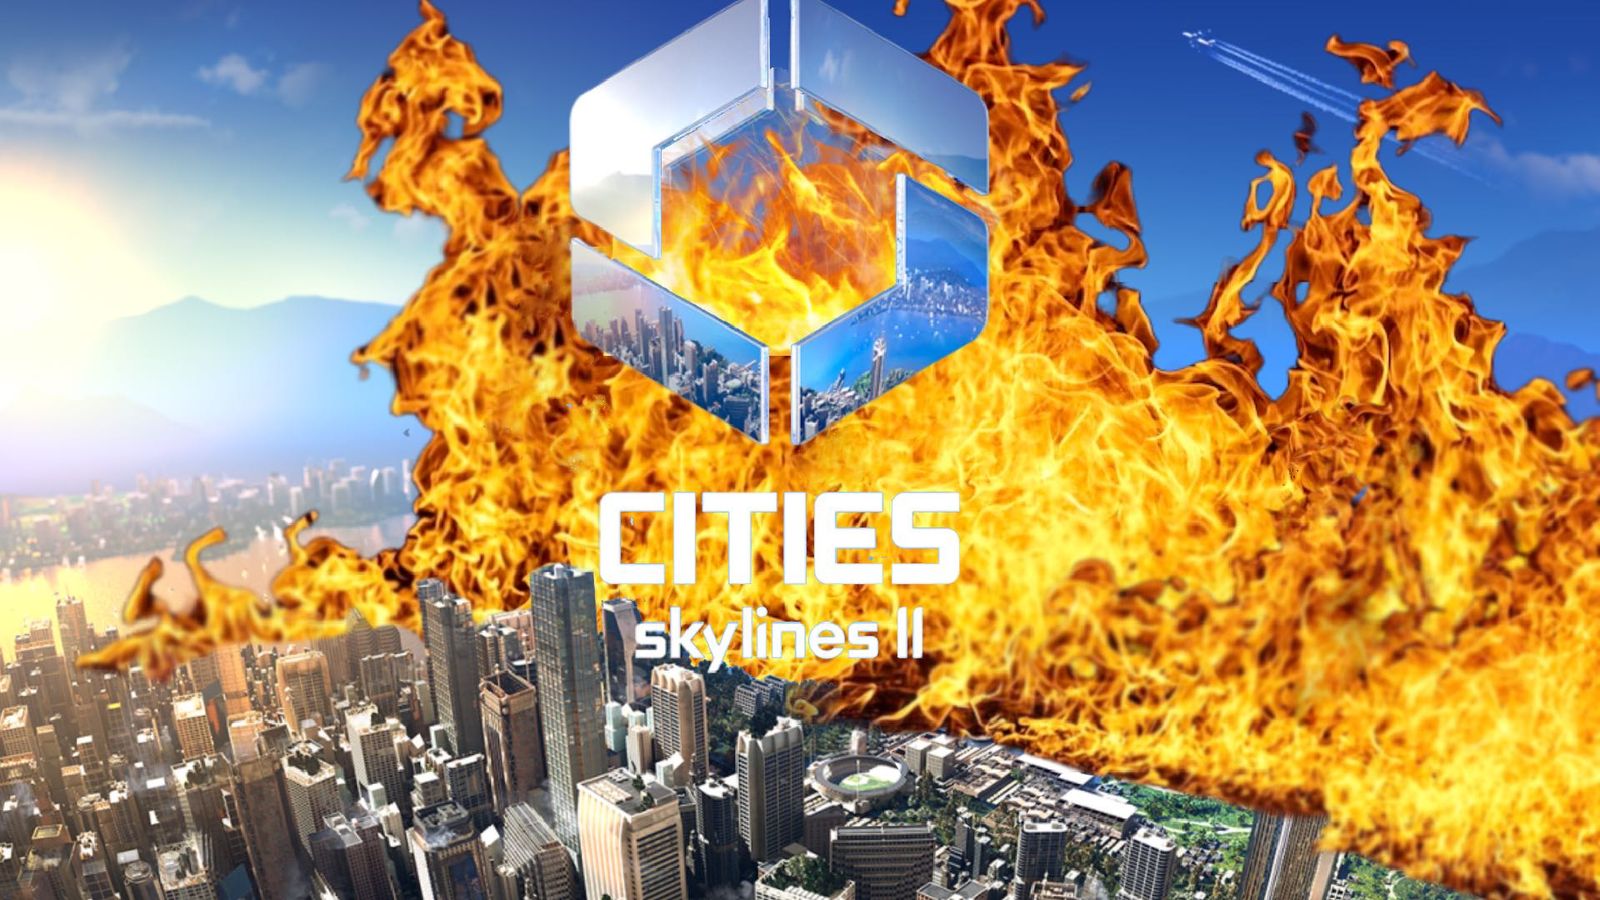 The cities skylines 2 keyart on fire 